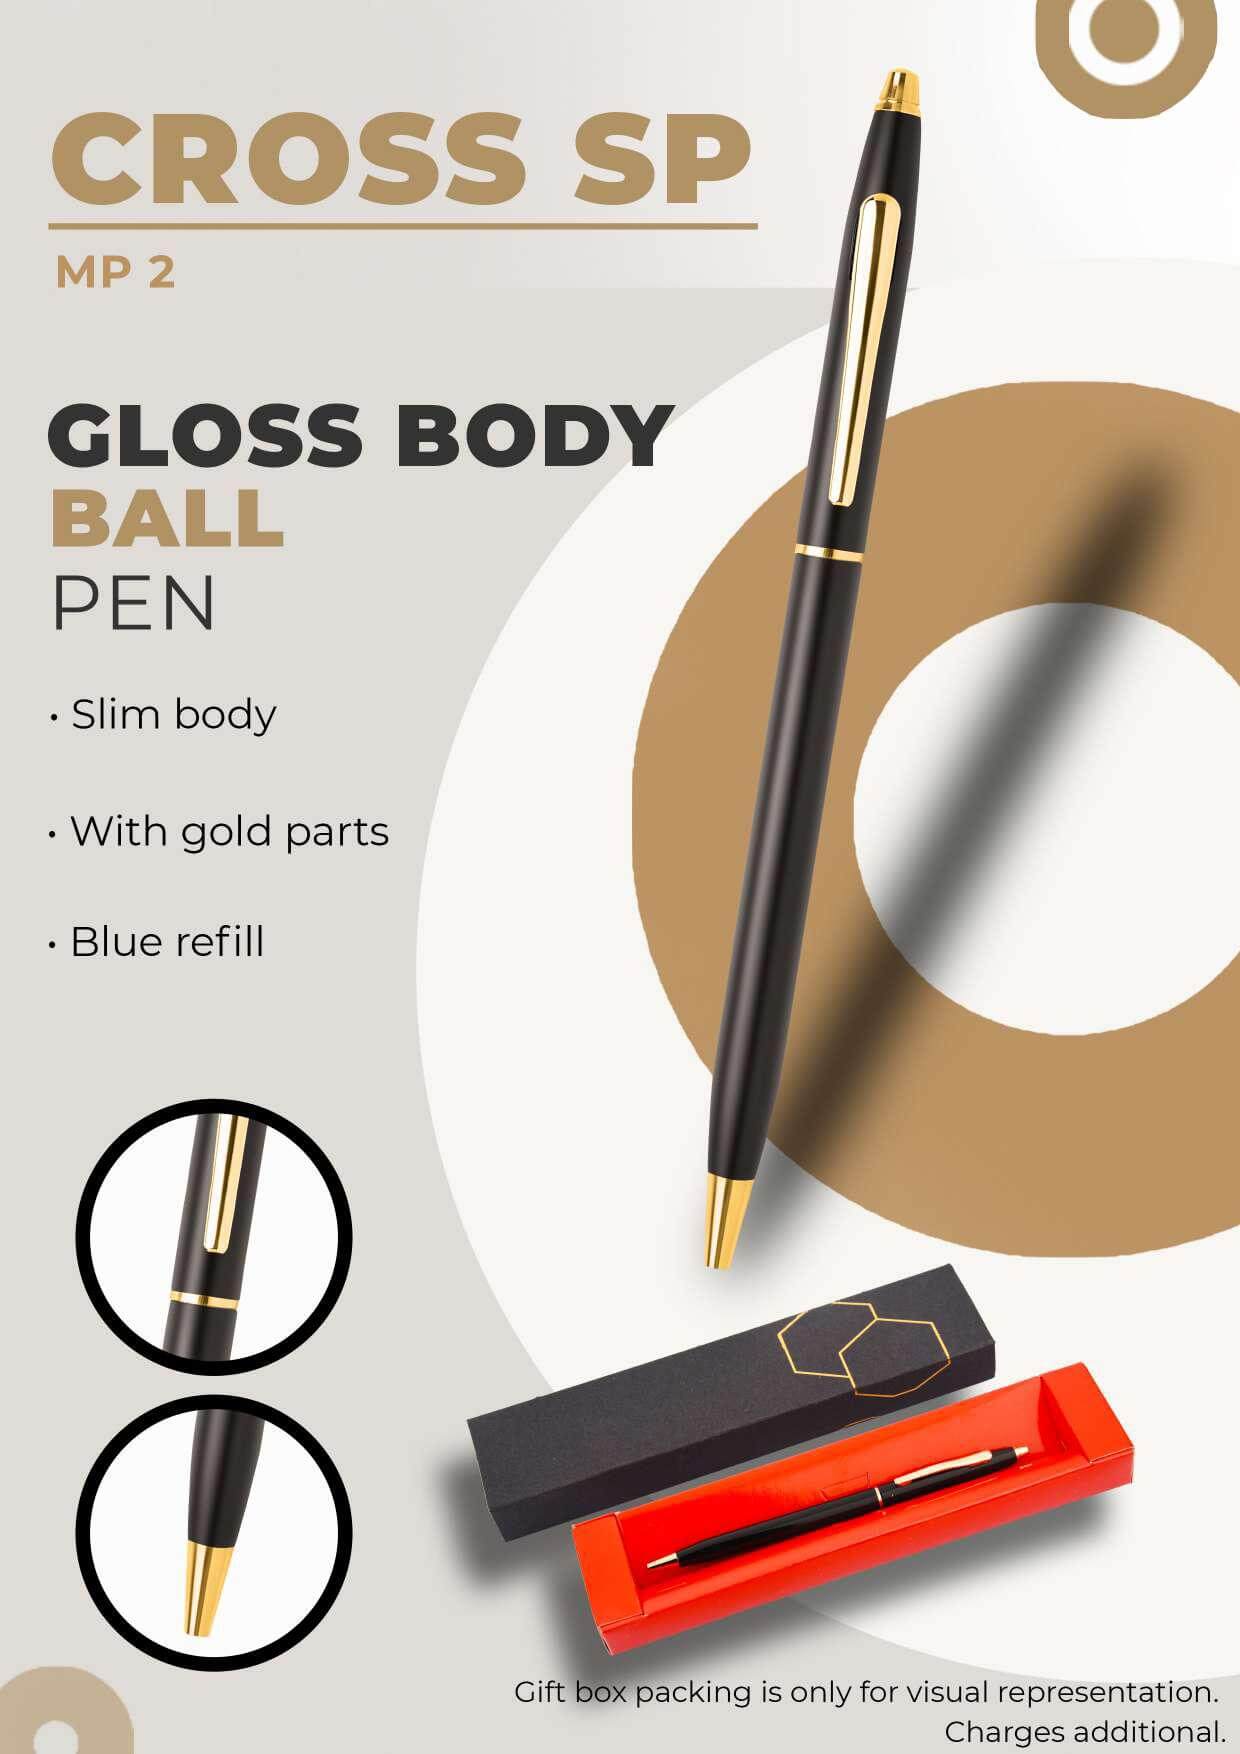 Glossy Body Ball Pen Cross SP